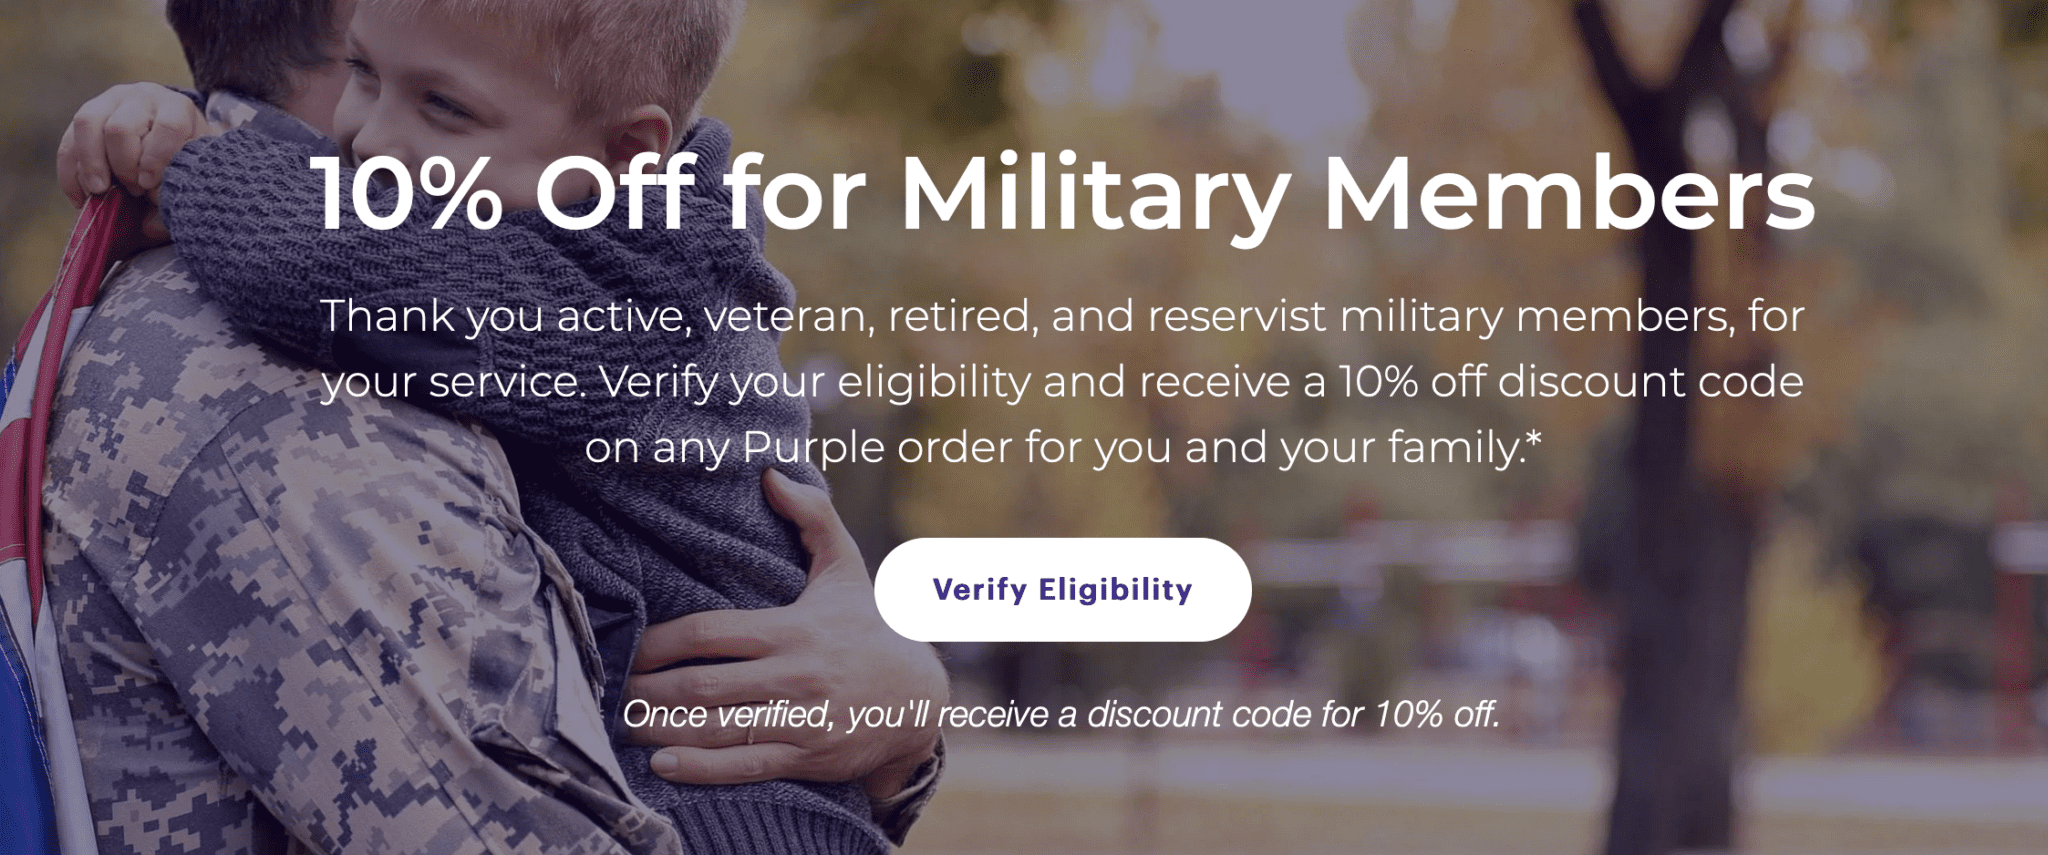 purple mattress canada military discount